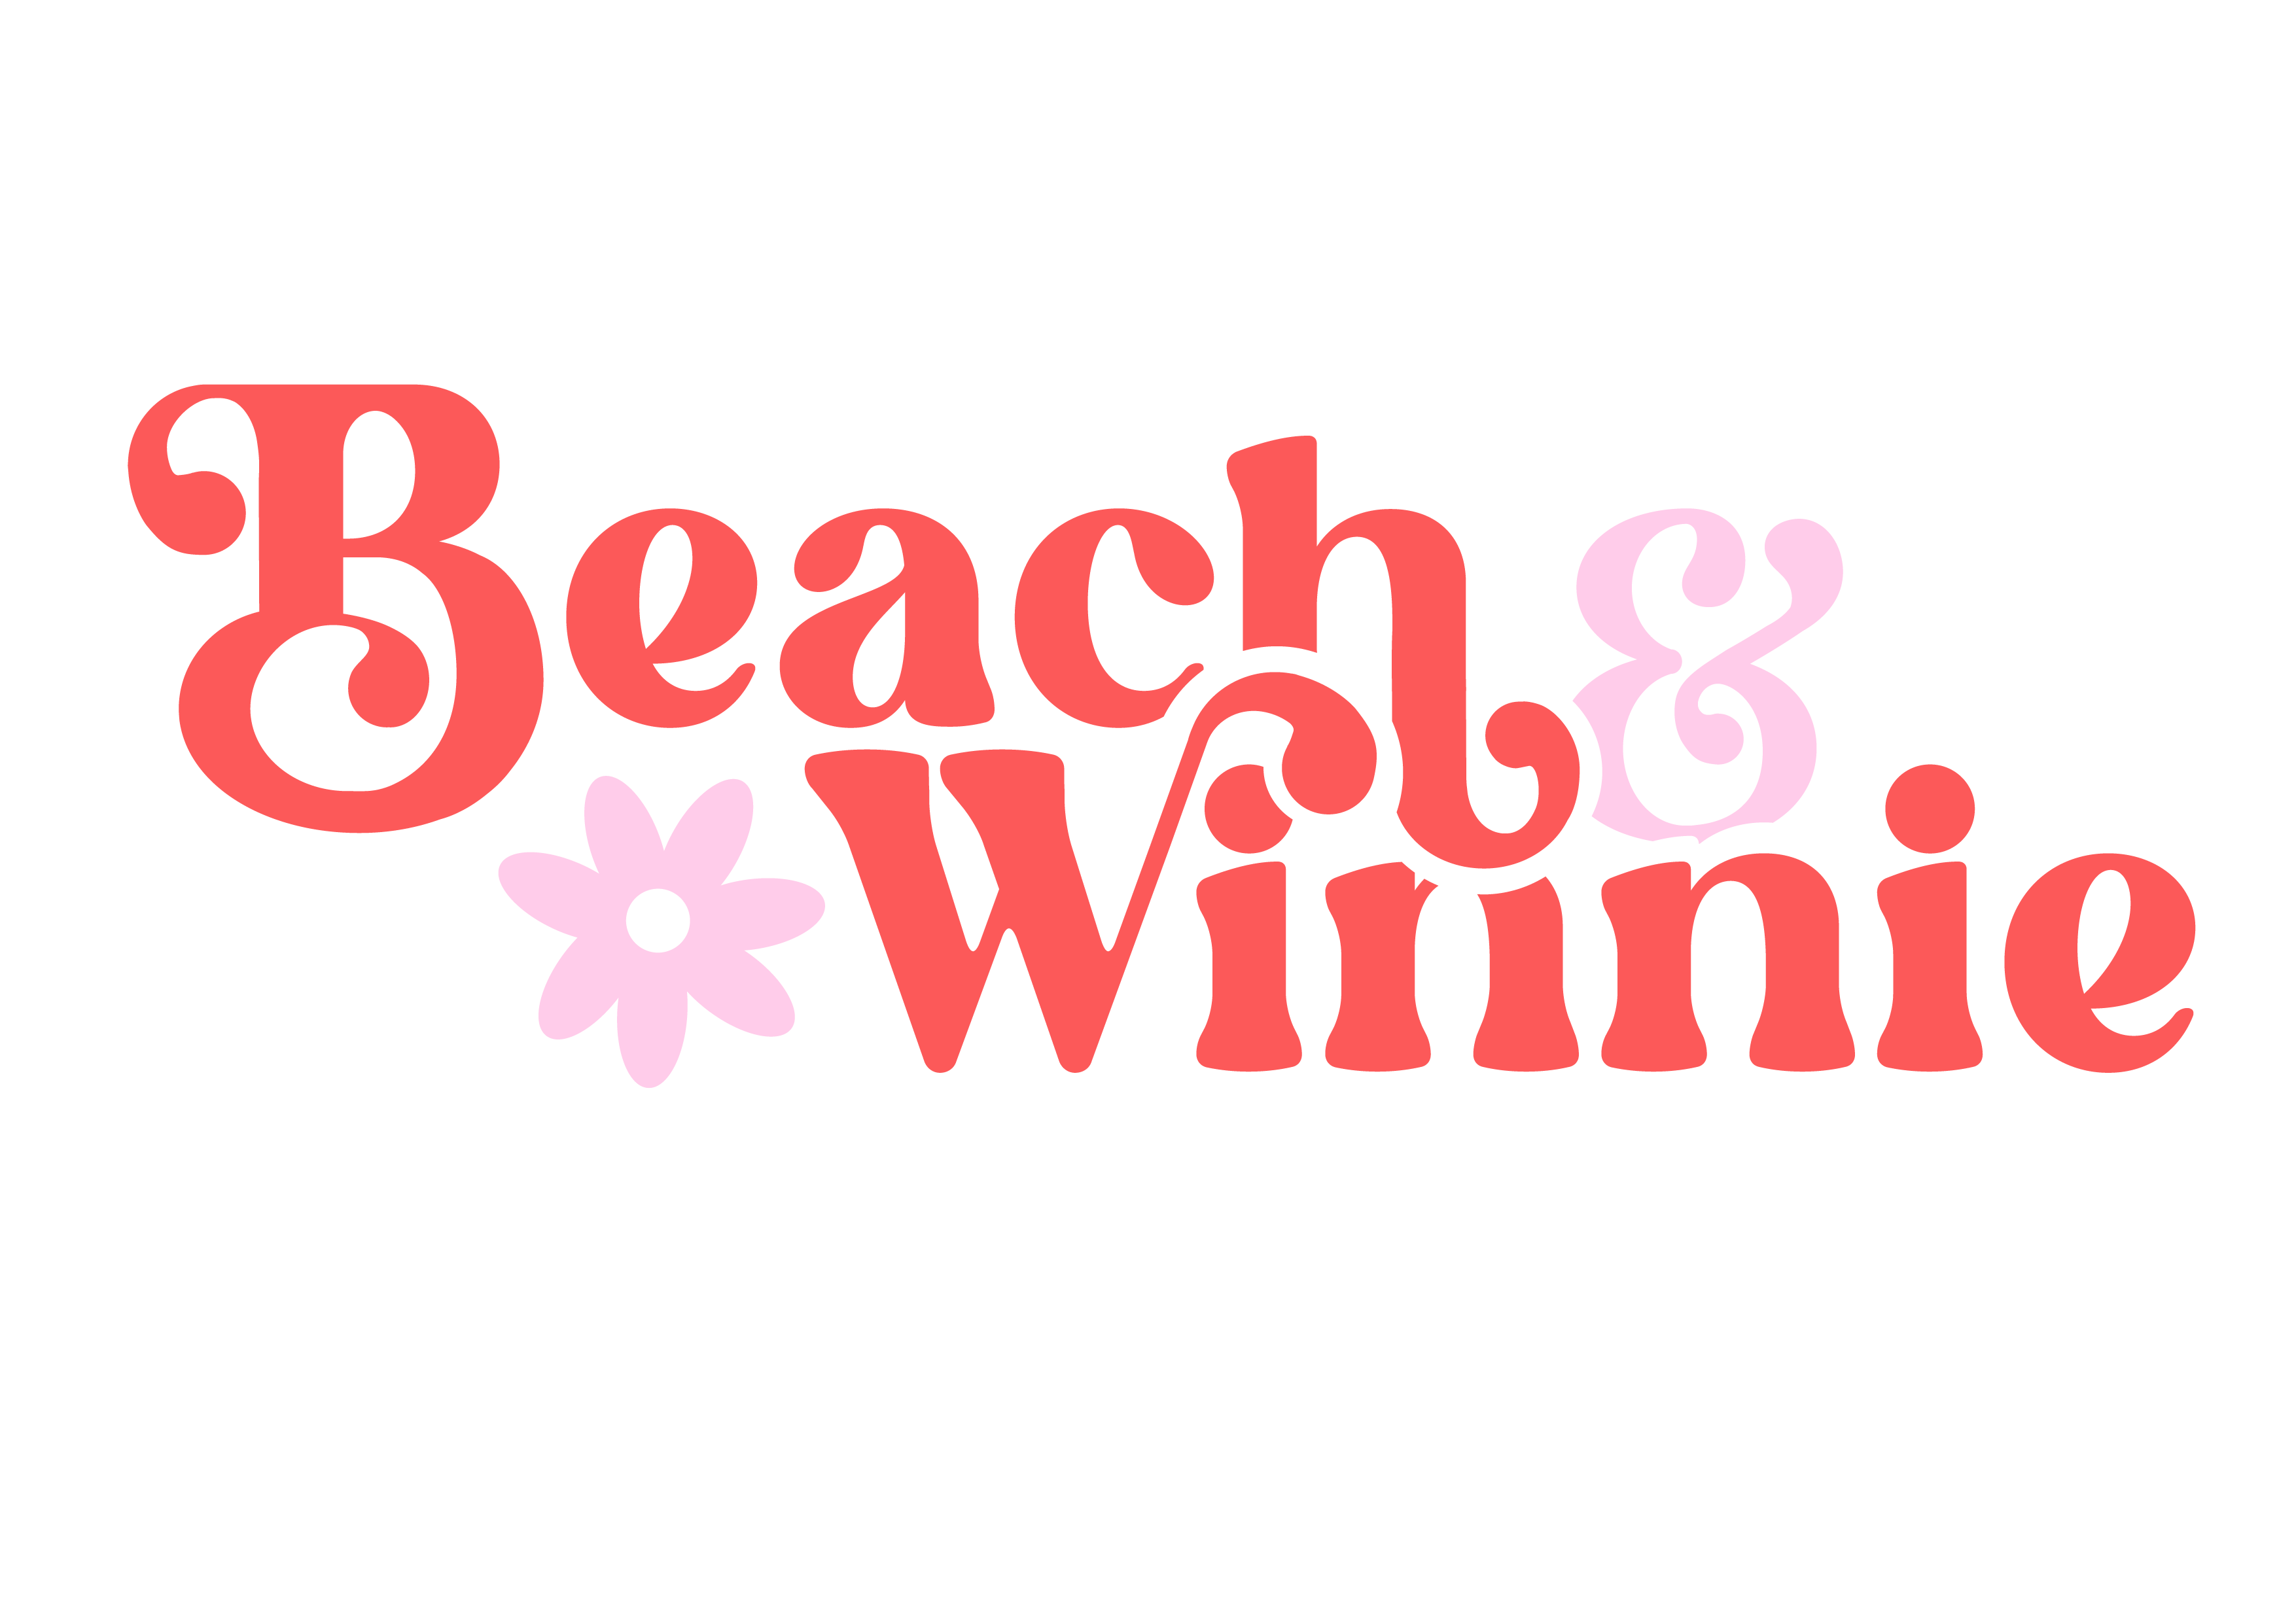 Beach&Winnie